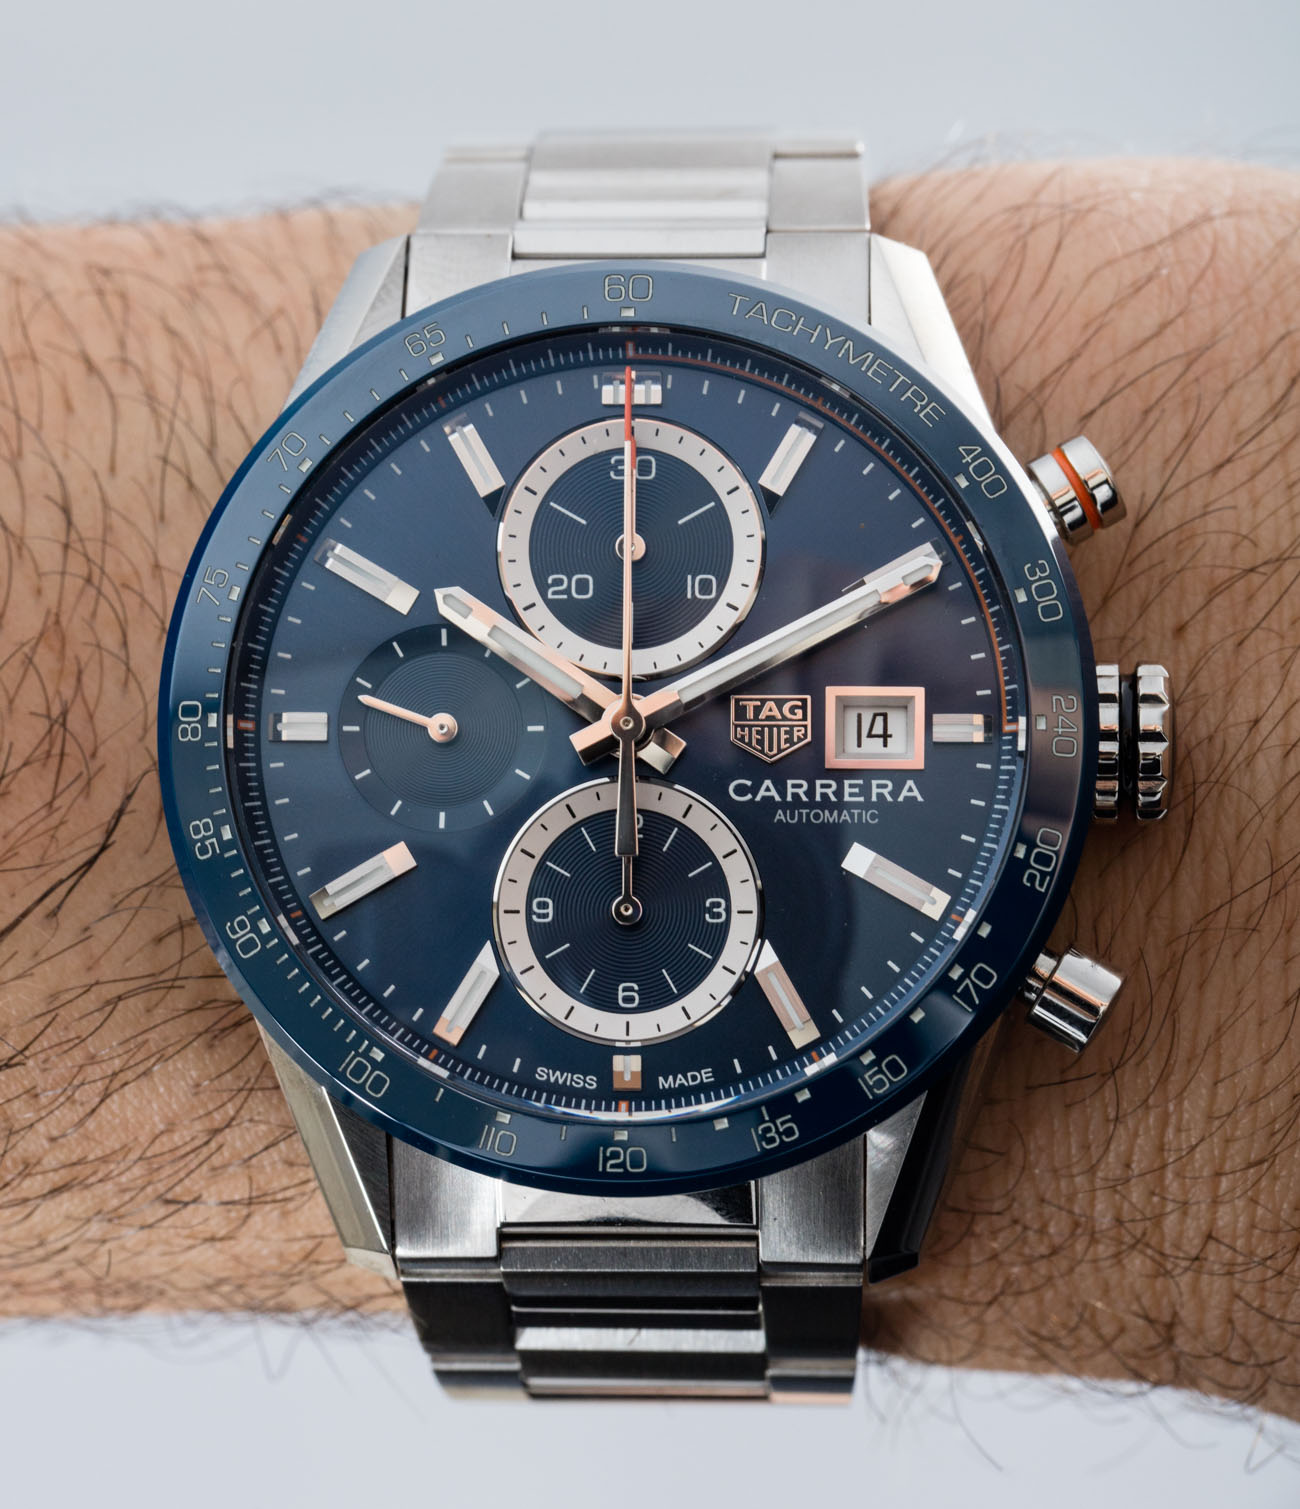 GEN 16 smart watch at Rs 1200/piece | Karol Bagh | Delhi | ID: 2853071281462